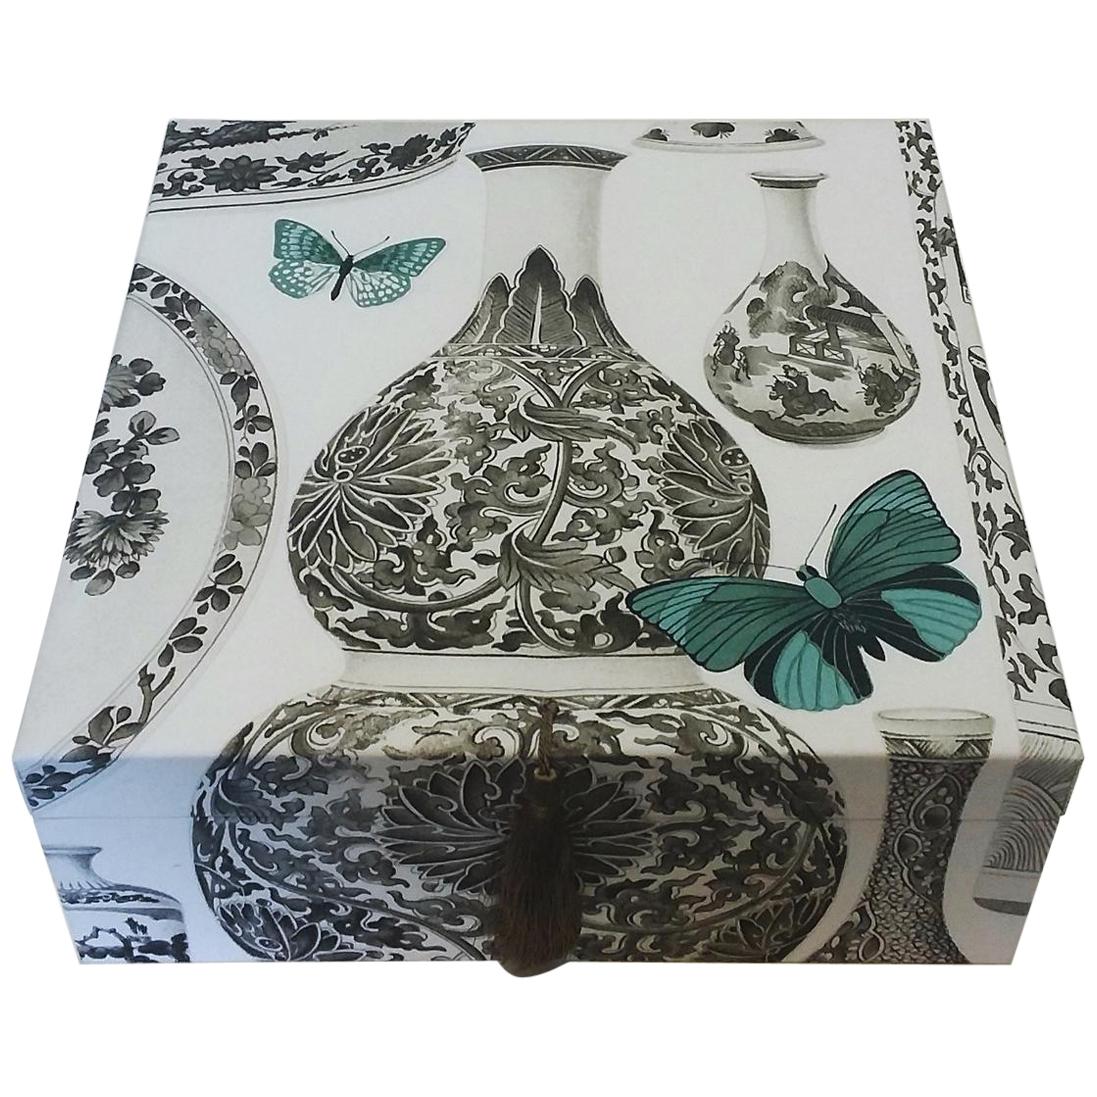 Manuel Canovas Fabric Decorative Storage Box for Scarves Handmade in France